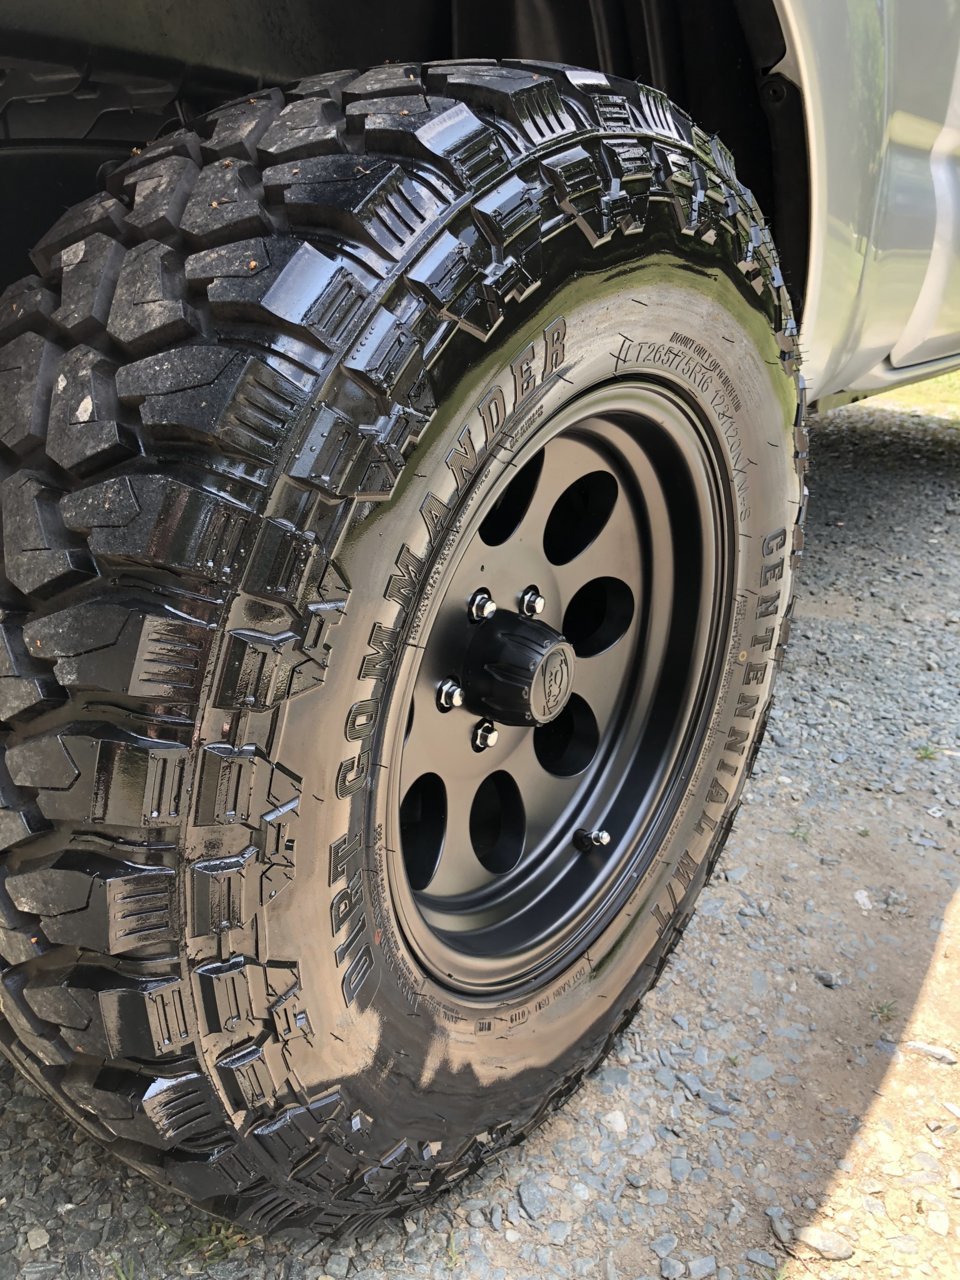 Tuf Shine Tire Cleaner 24 oz + Tire Brush - Car Auto Truck